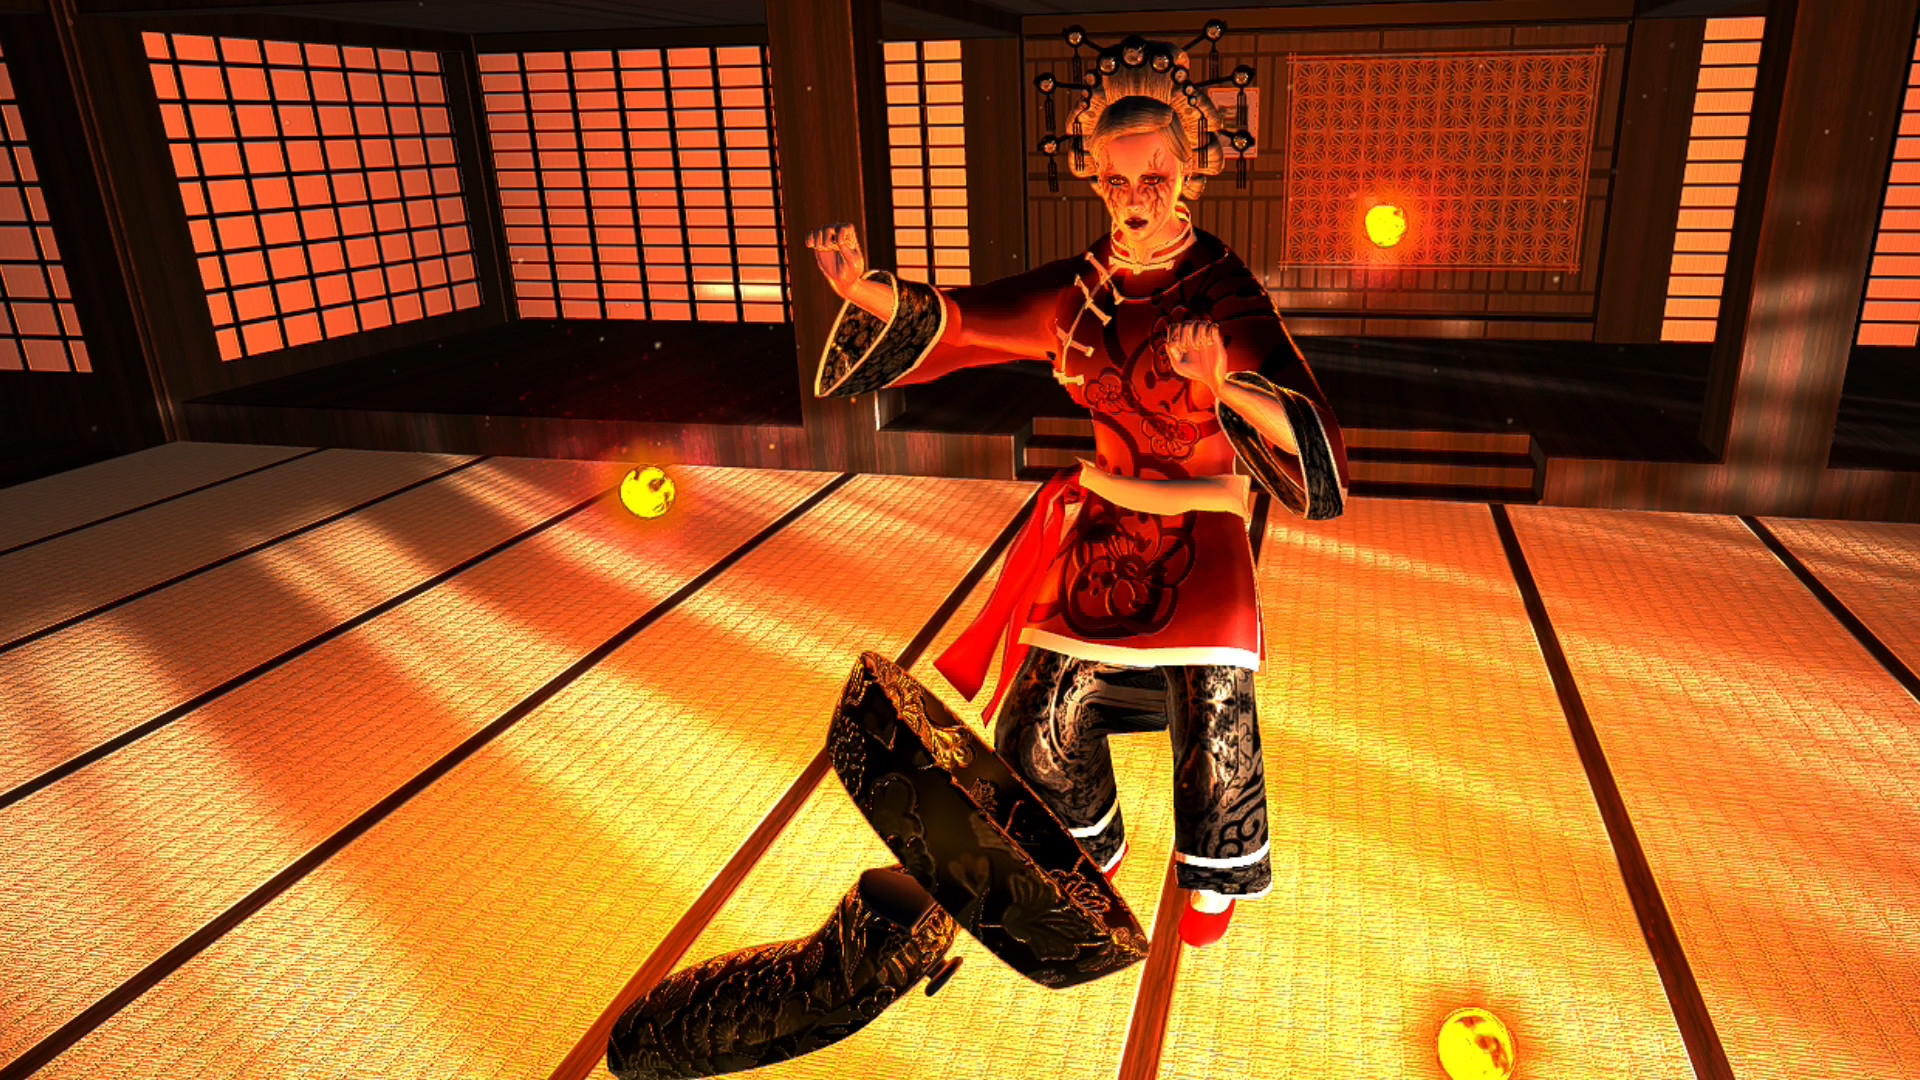 Dragon Fist: VR Kung Fu Free Download